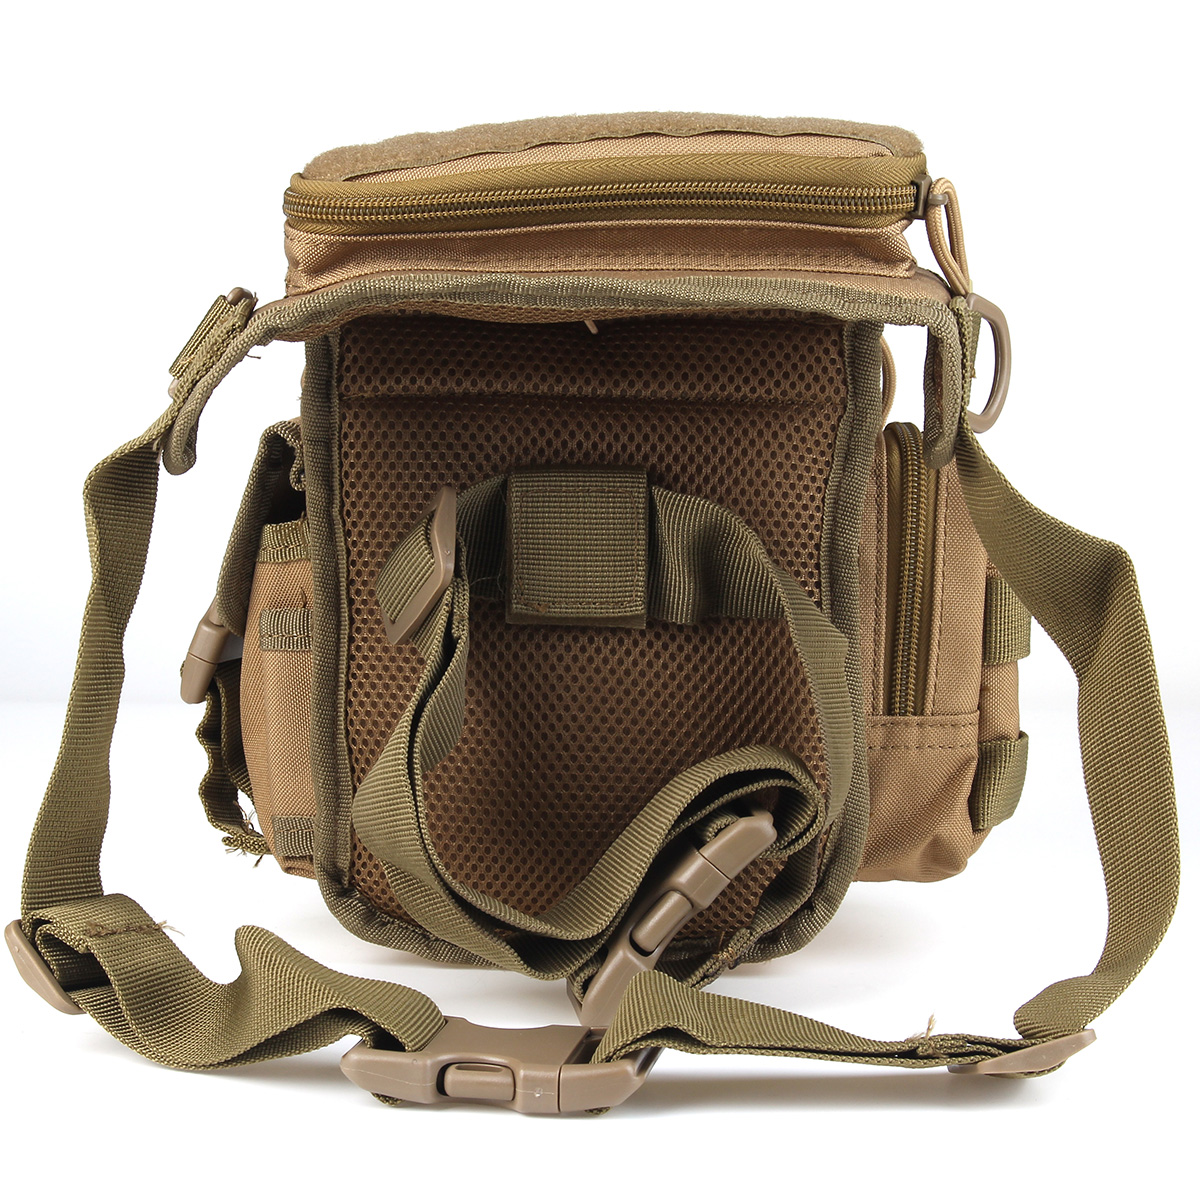 Nylon-Tactical-Waist-Bag-Military-Belt-Buckle-Pouches-Storage-Bag-Leg-Bag-Outdoor-Hunting-Climbing-1763612-6